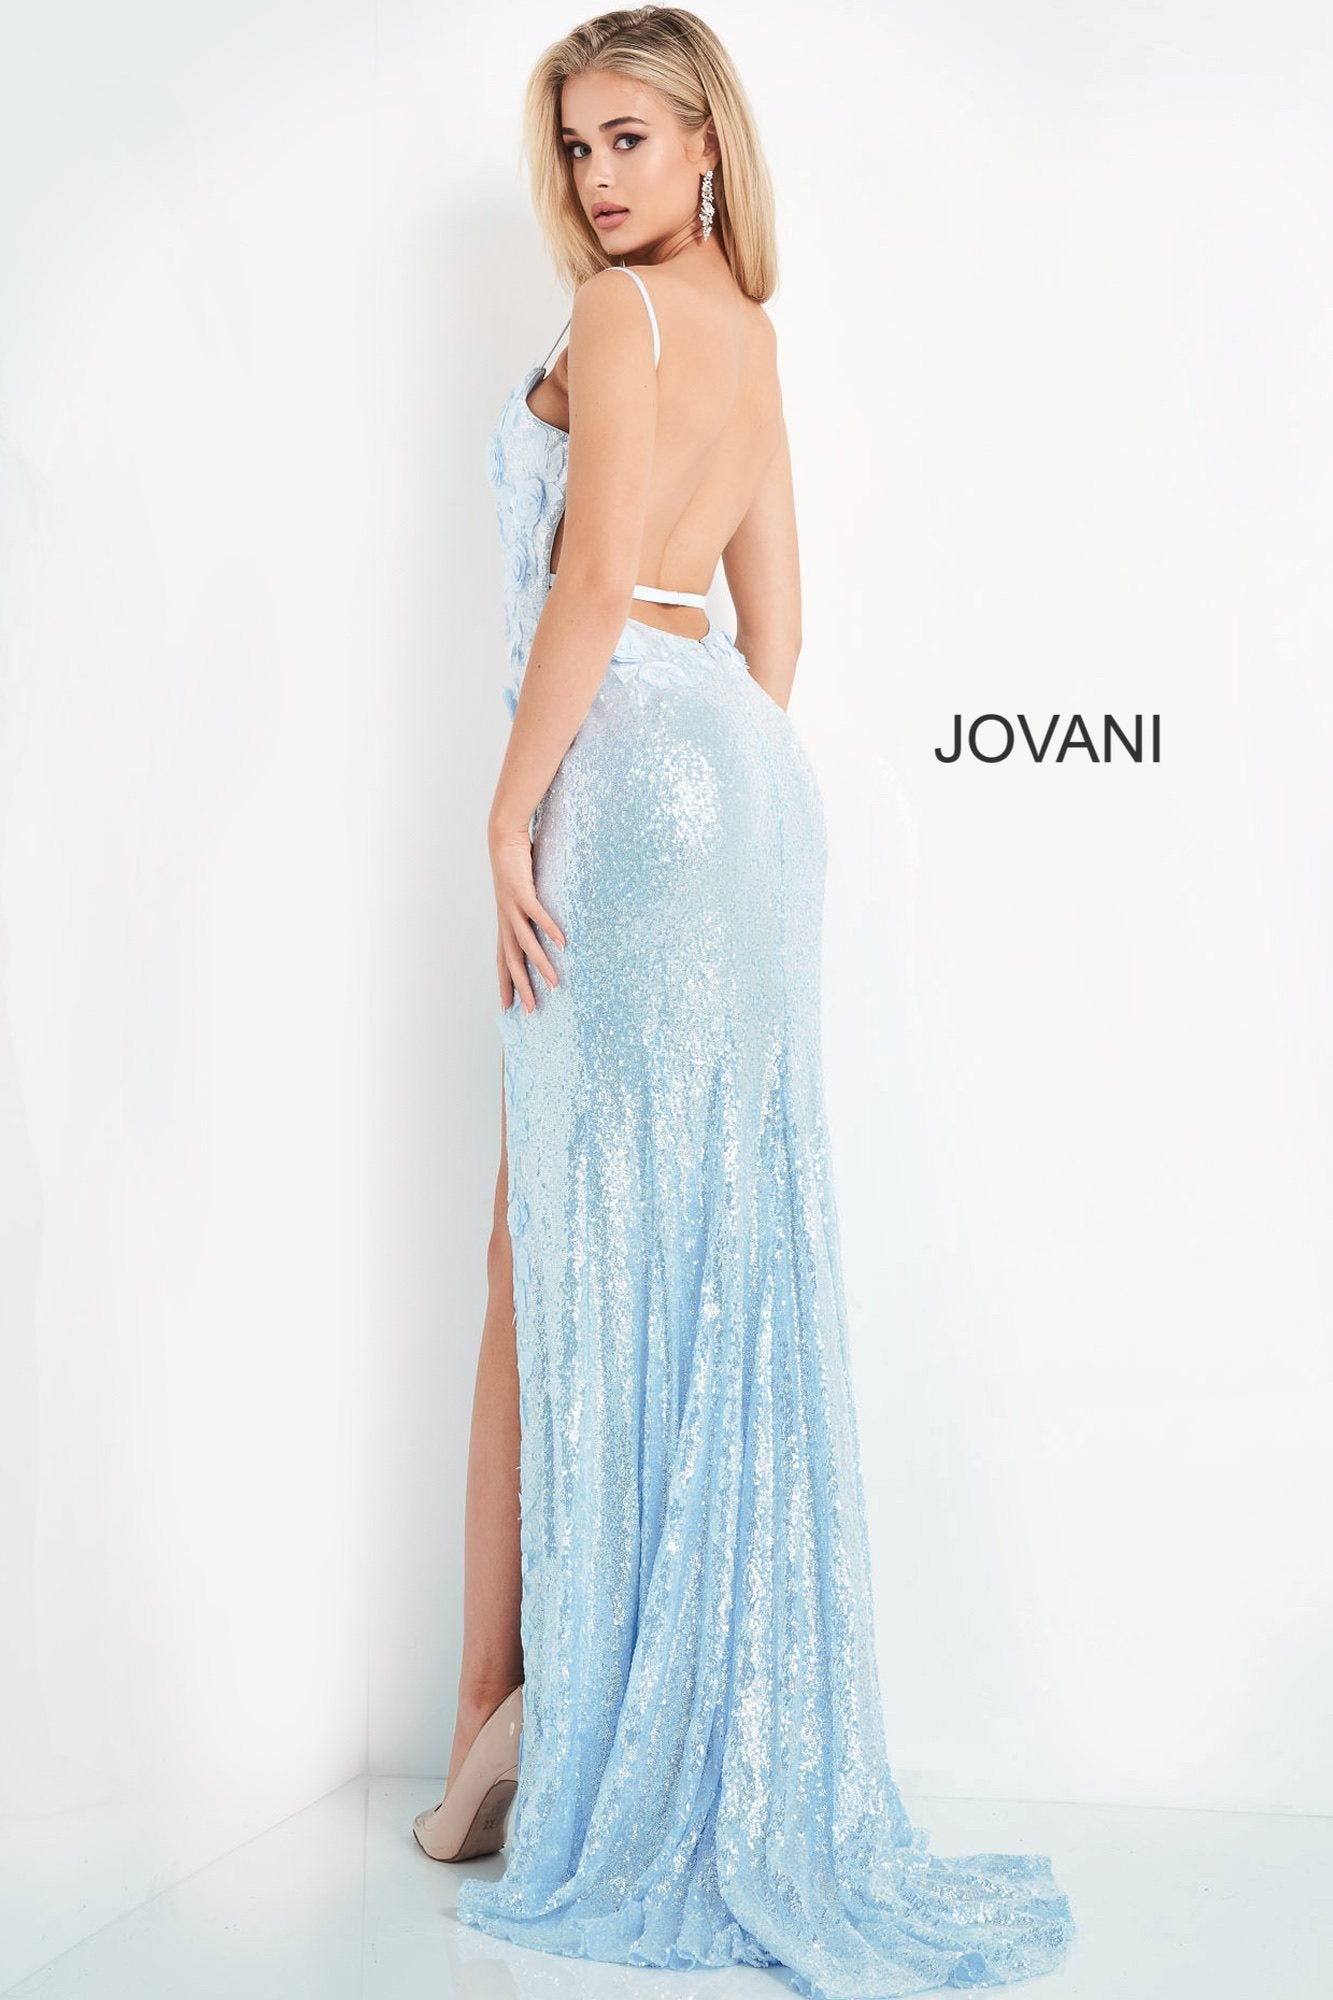 Jovani 1012 light blue